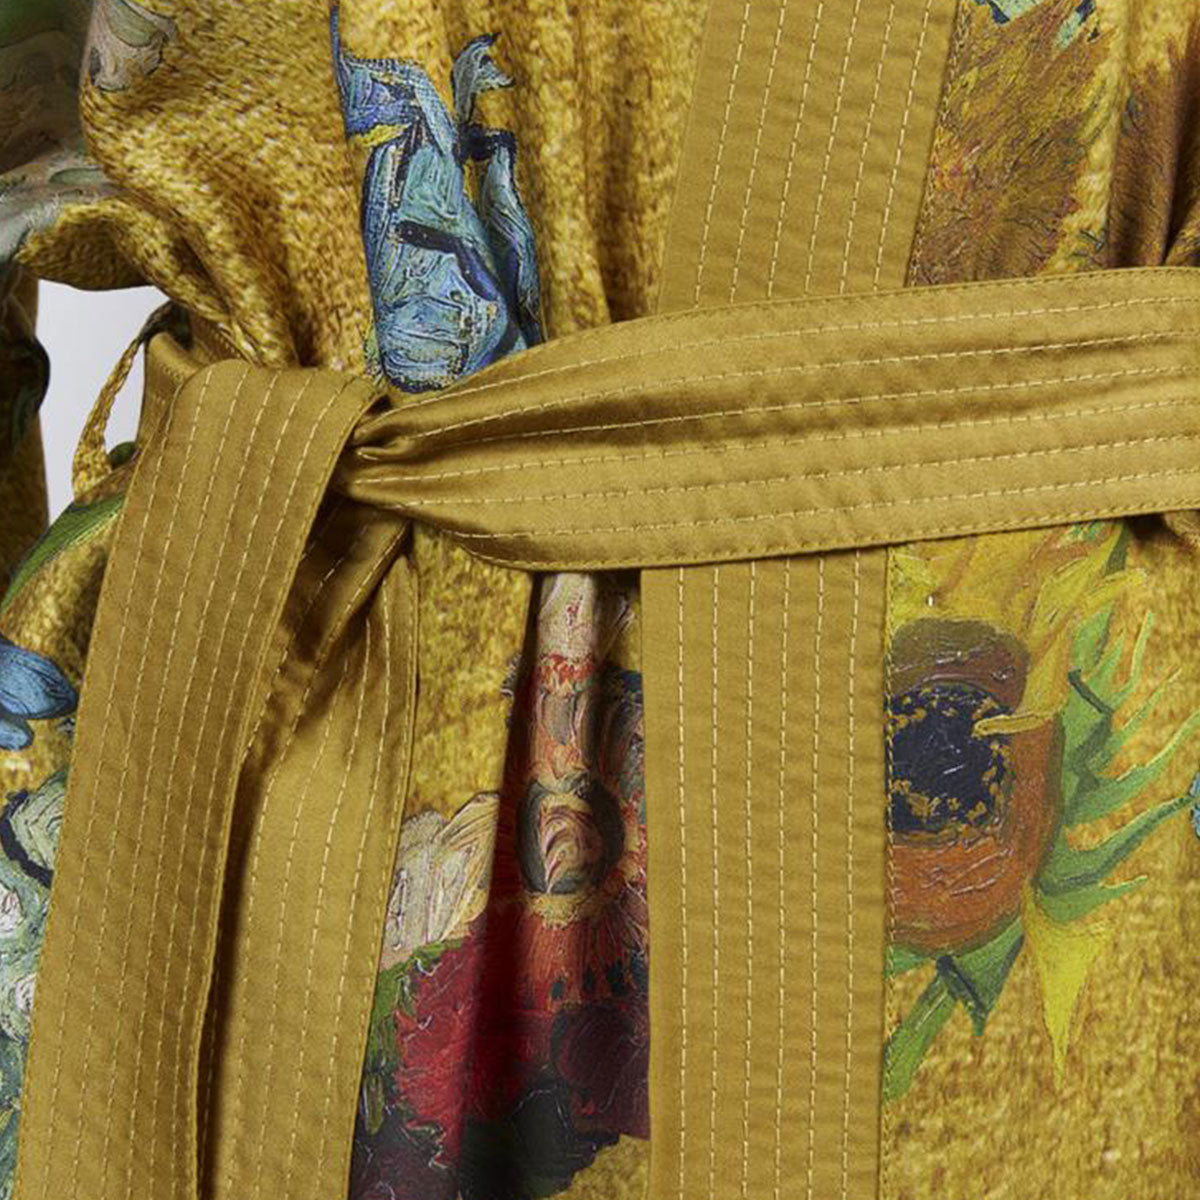 Bedding House Van Gogh Partout des Fleurs Gold Kimono Bath Robe Large/Extra Large